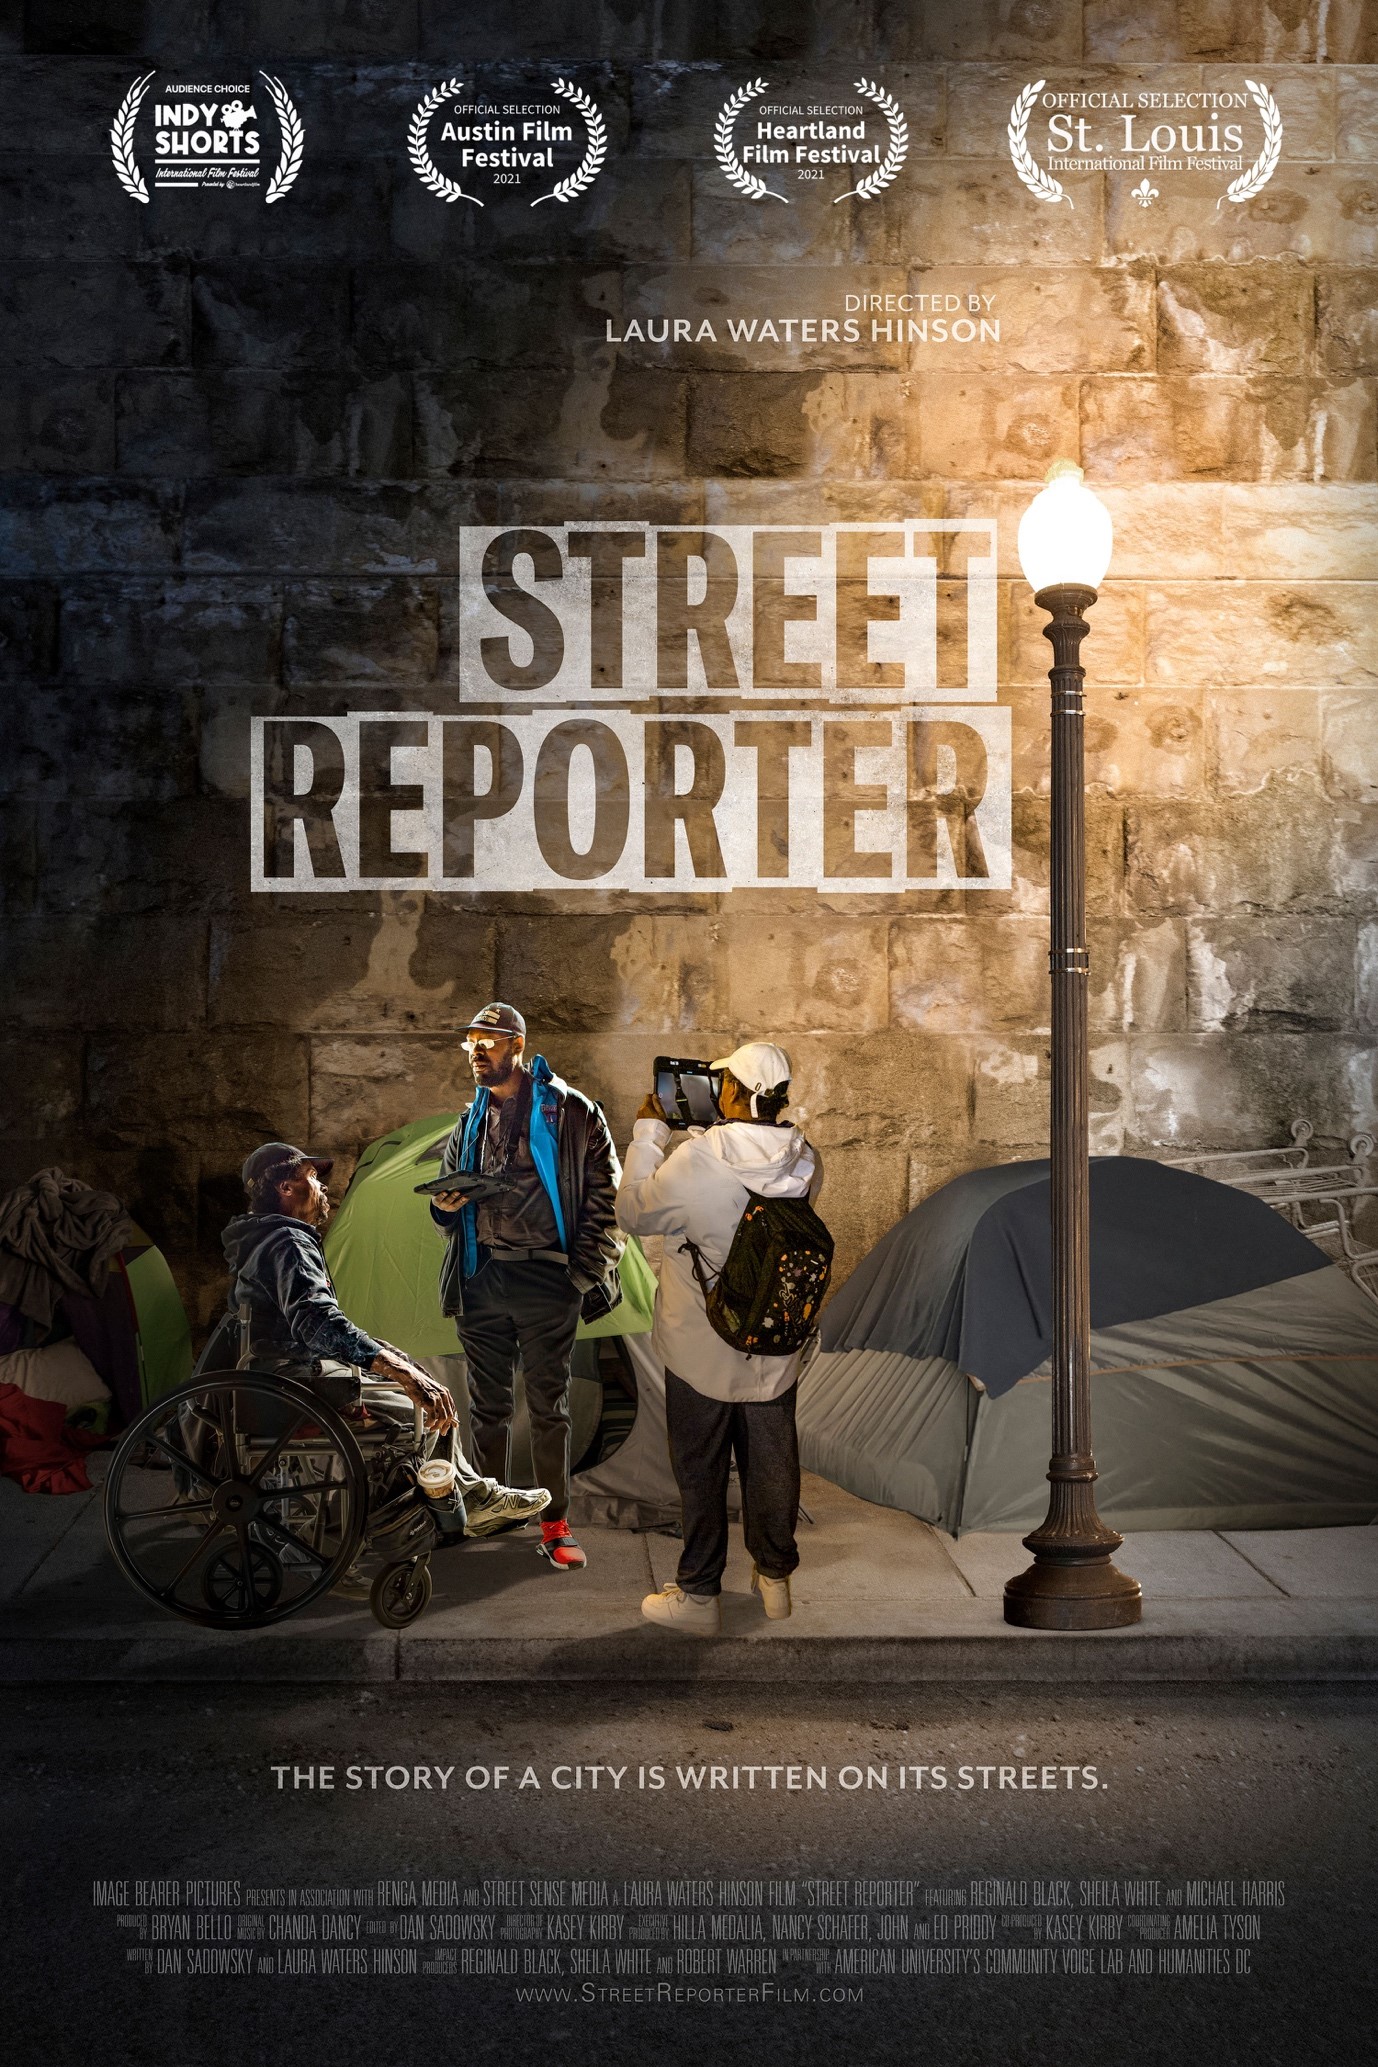 Oscar Qualifying Documentary Short Film Review “Street Reporter” One